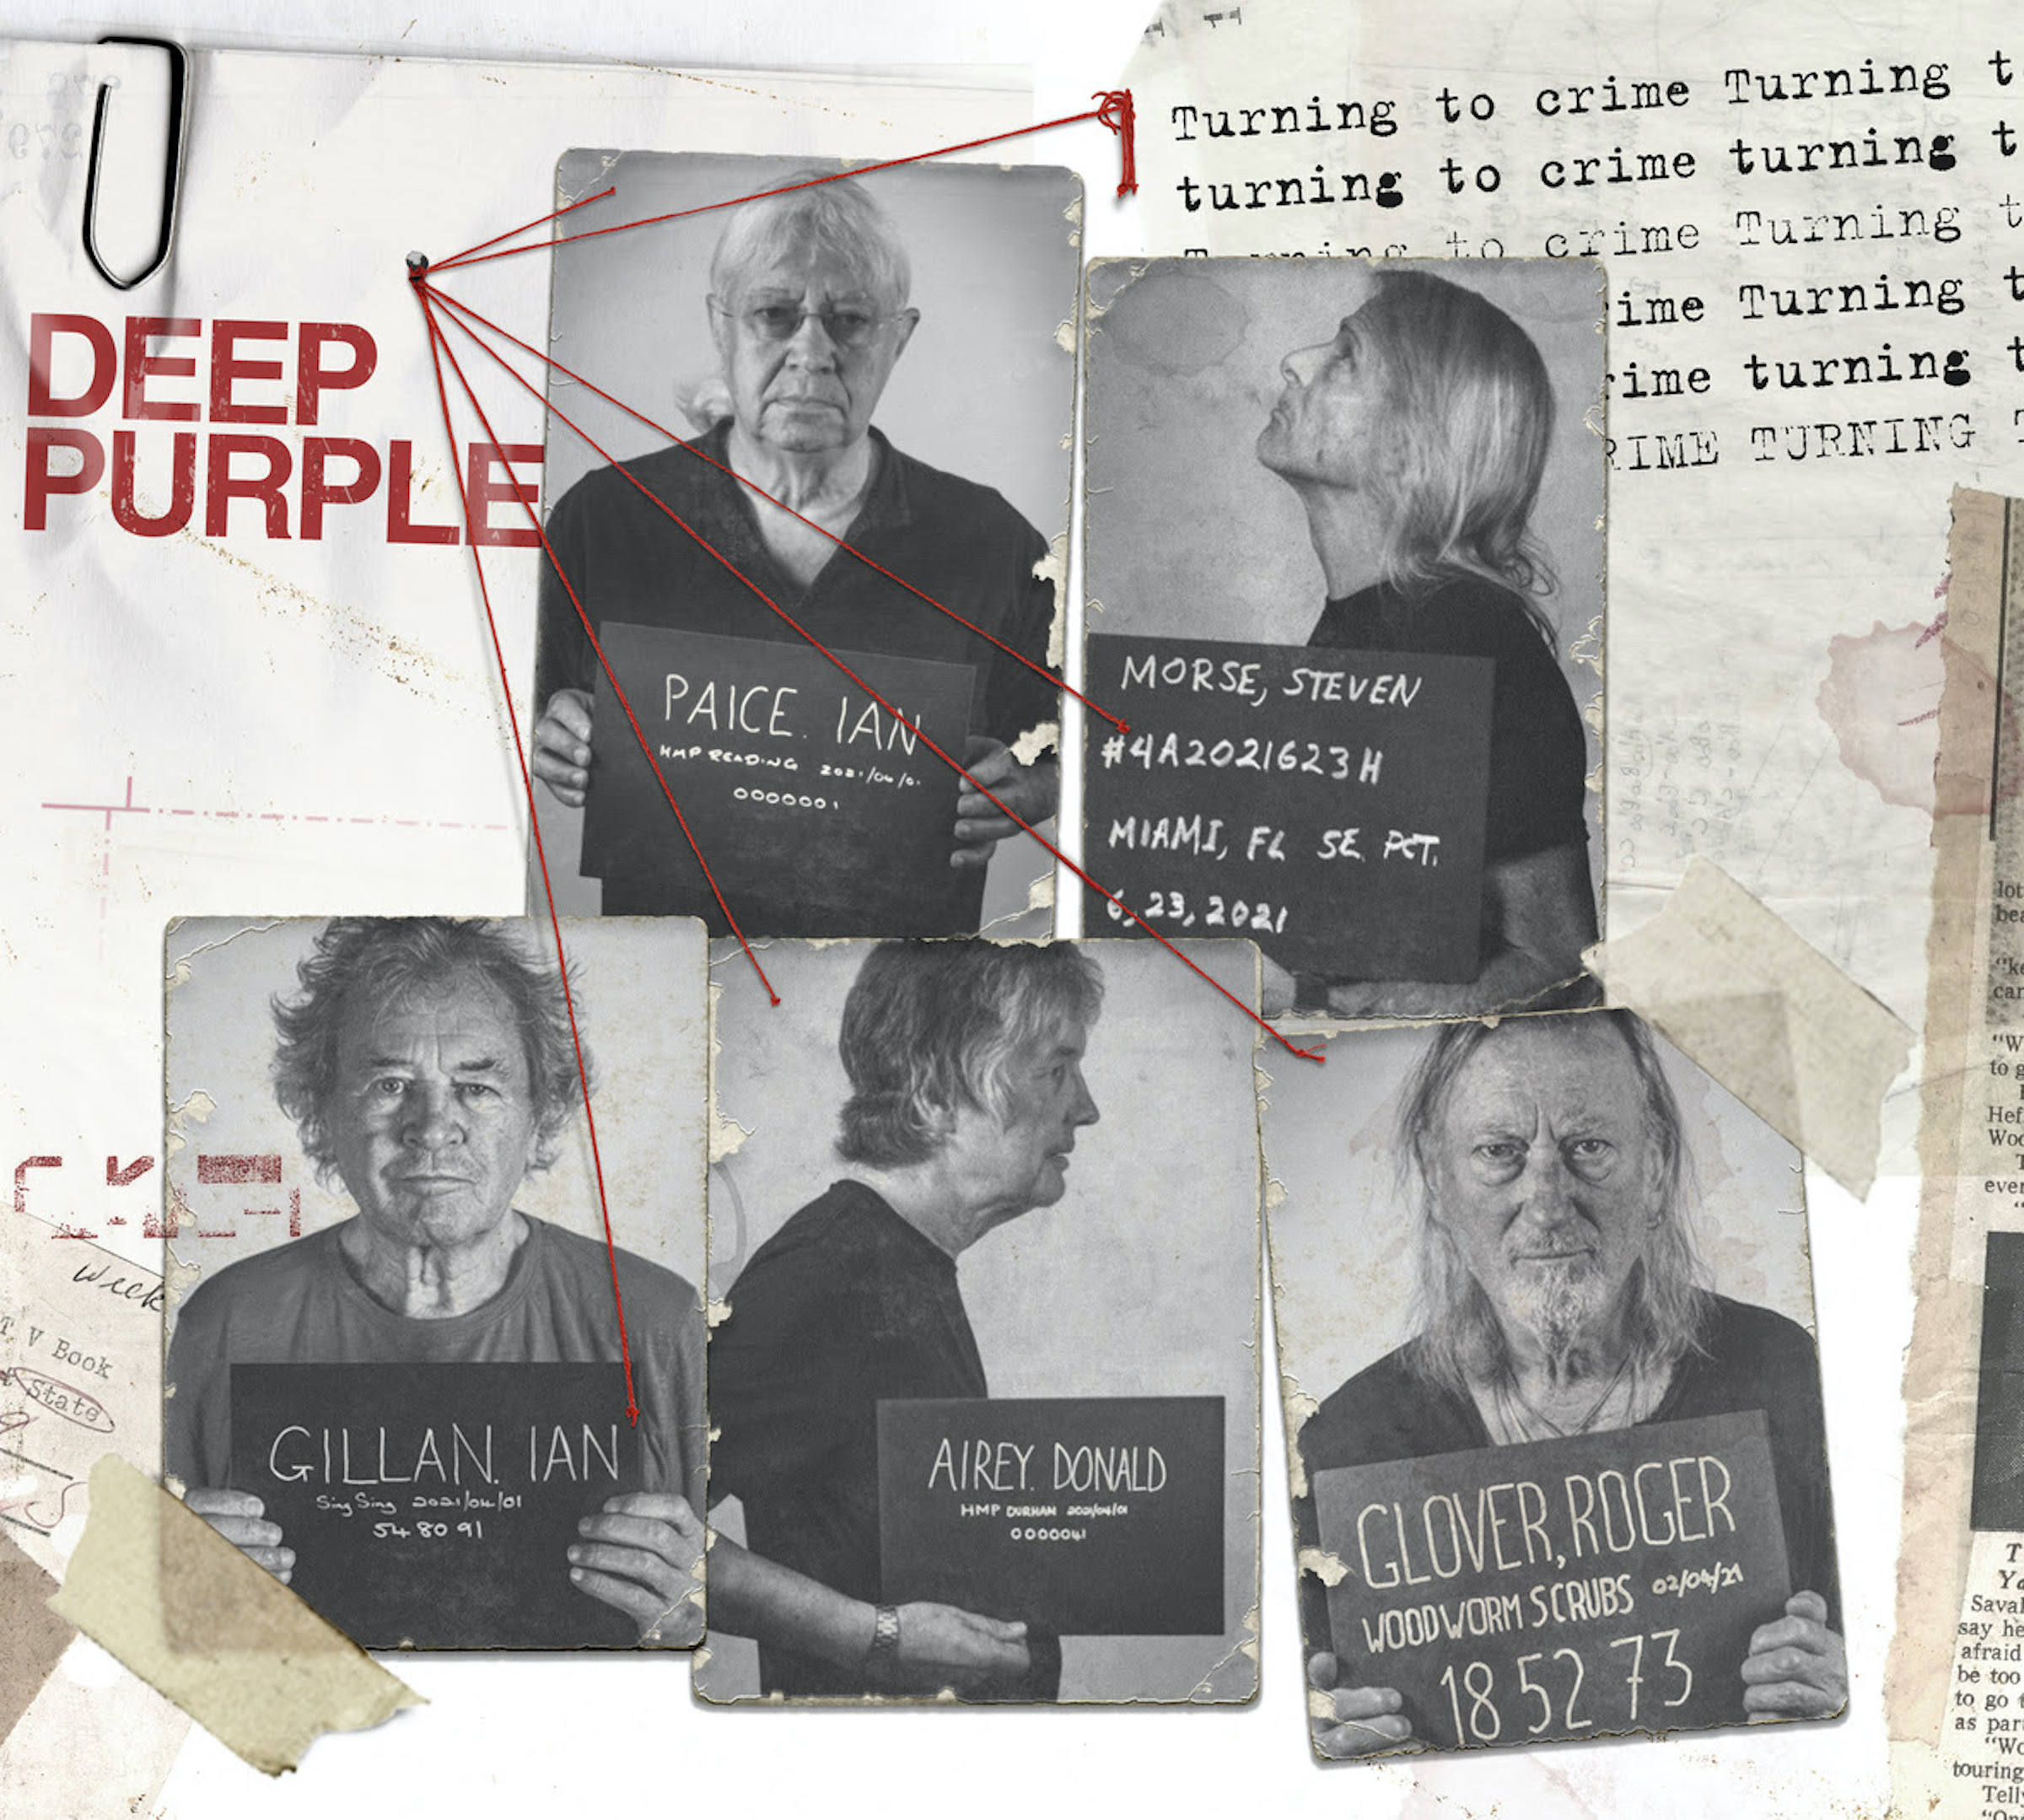 Deep Purple Announces New Album Turning To Crime